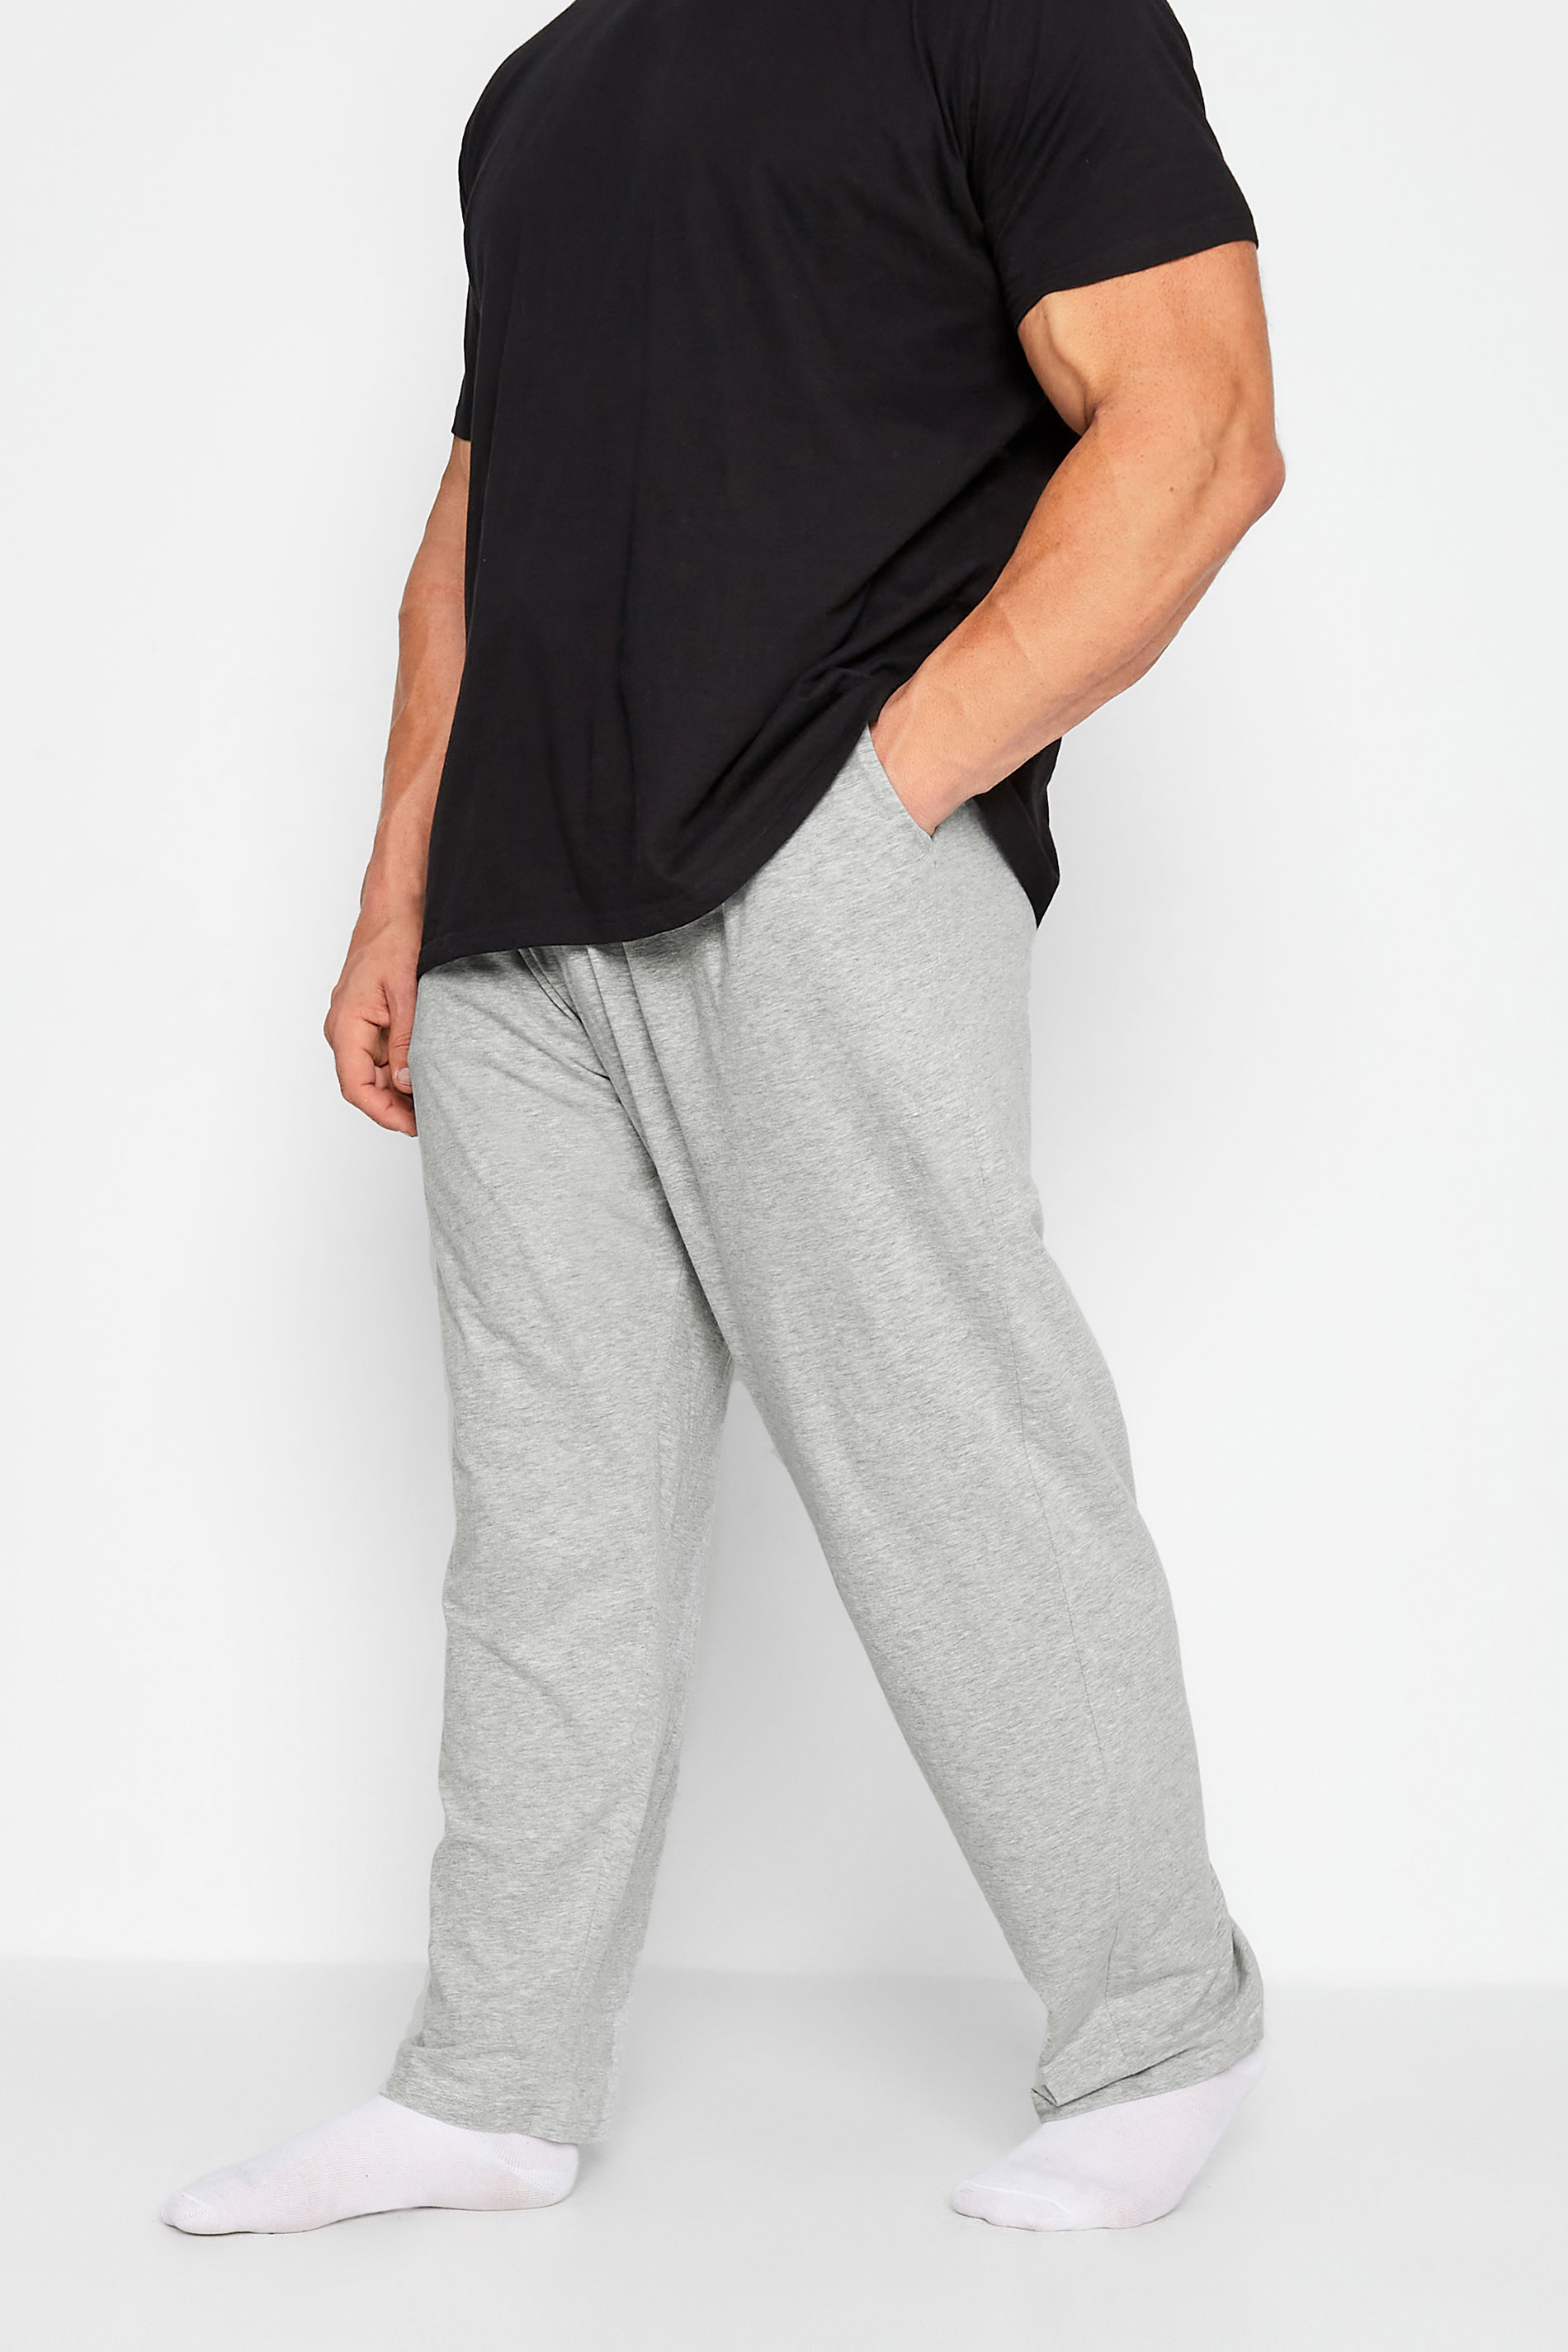 BadRhino Plus Size Big & Tall Black & Grey Pyjama Set | BadRhino 3